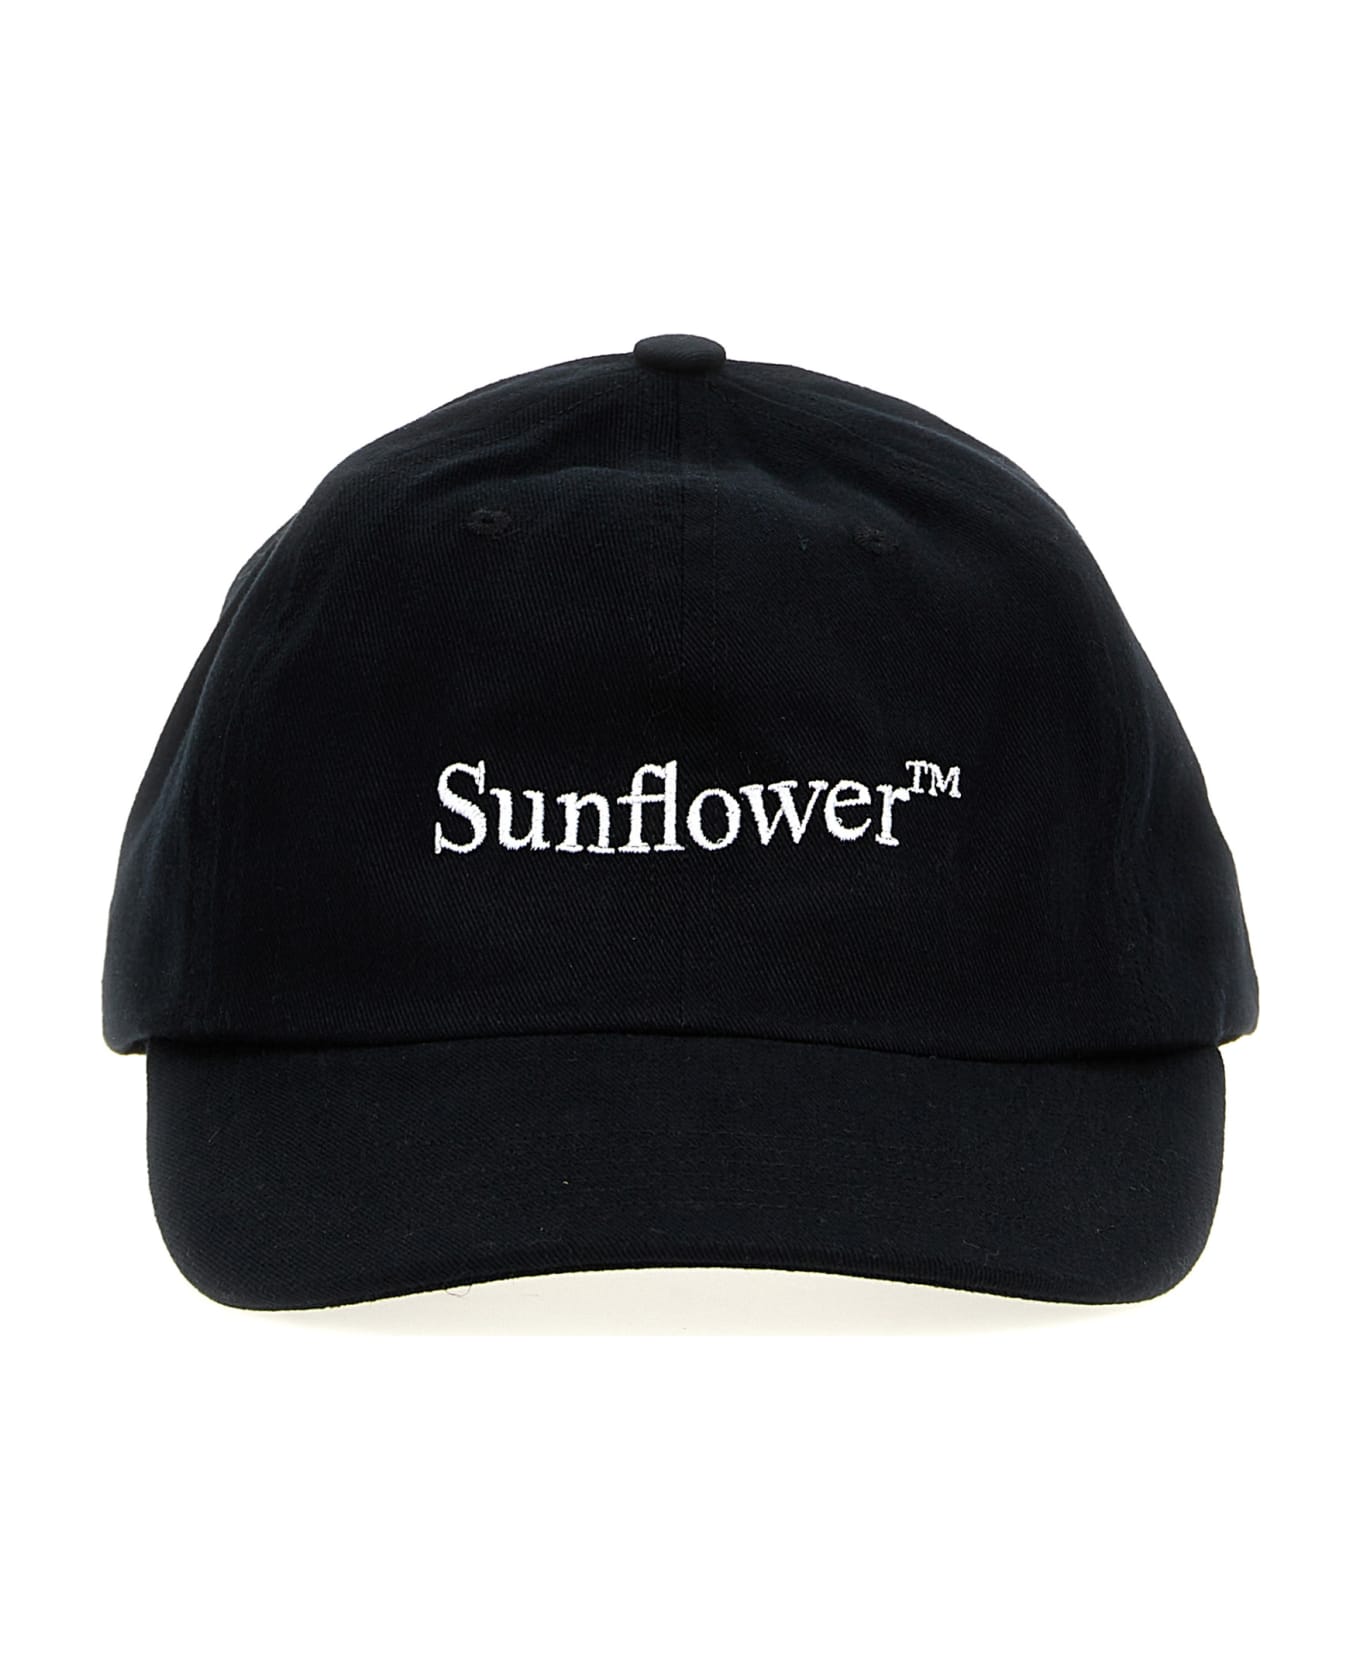 Sunflower Logo Embroidery Cap - Black  